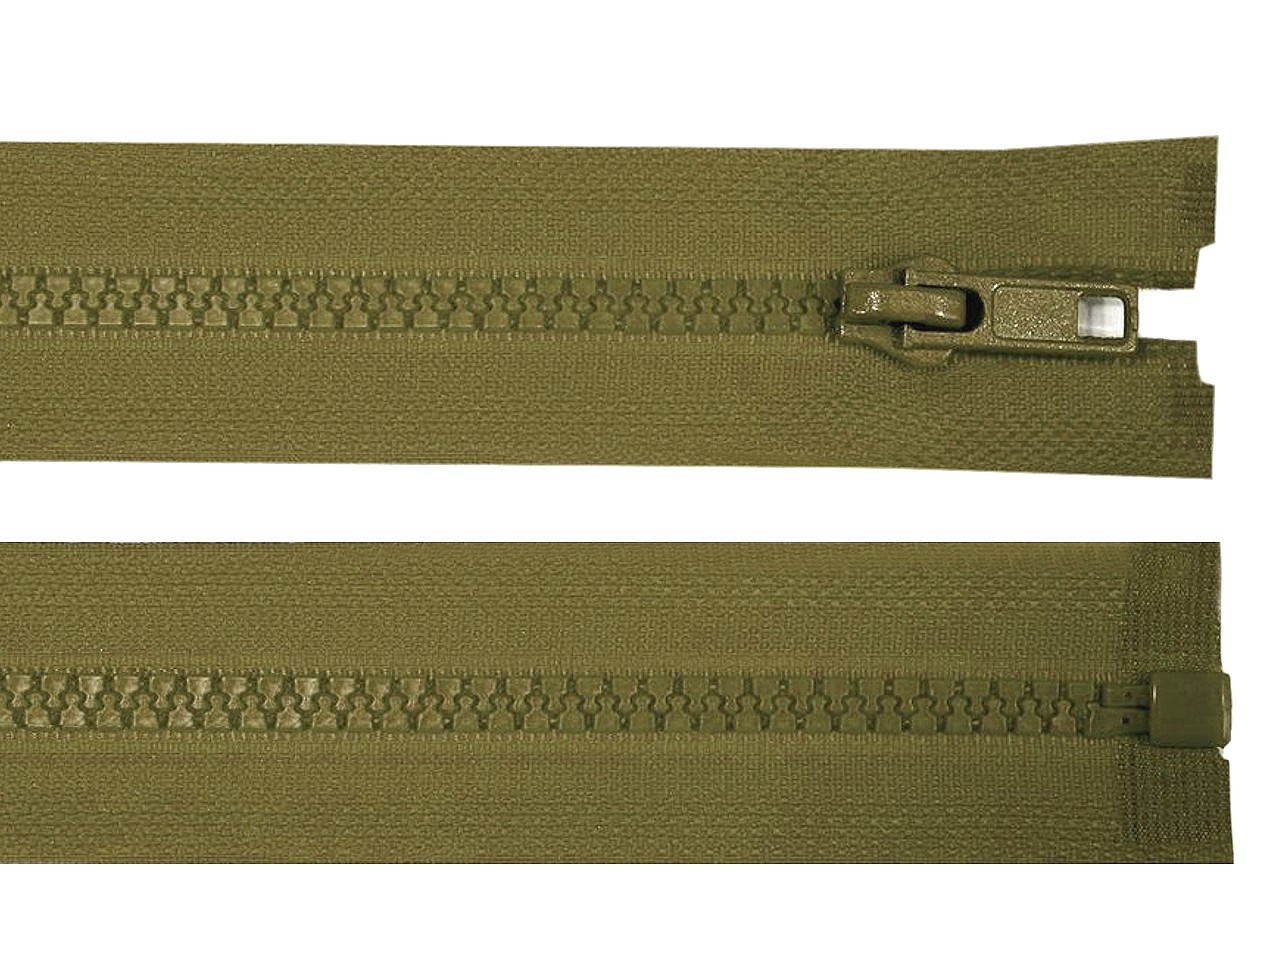 Kostěný zip No 5 délka 55 cm bundový, barva 298 zelená khaki tmavá